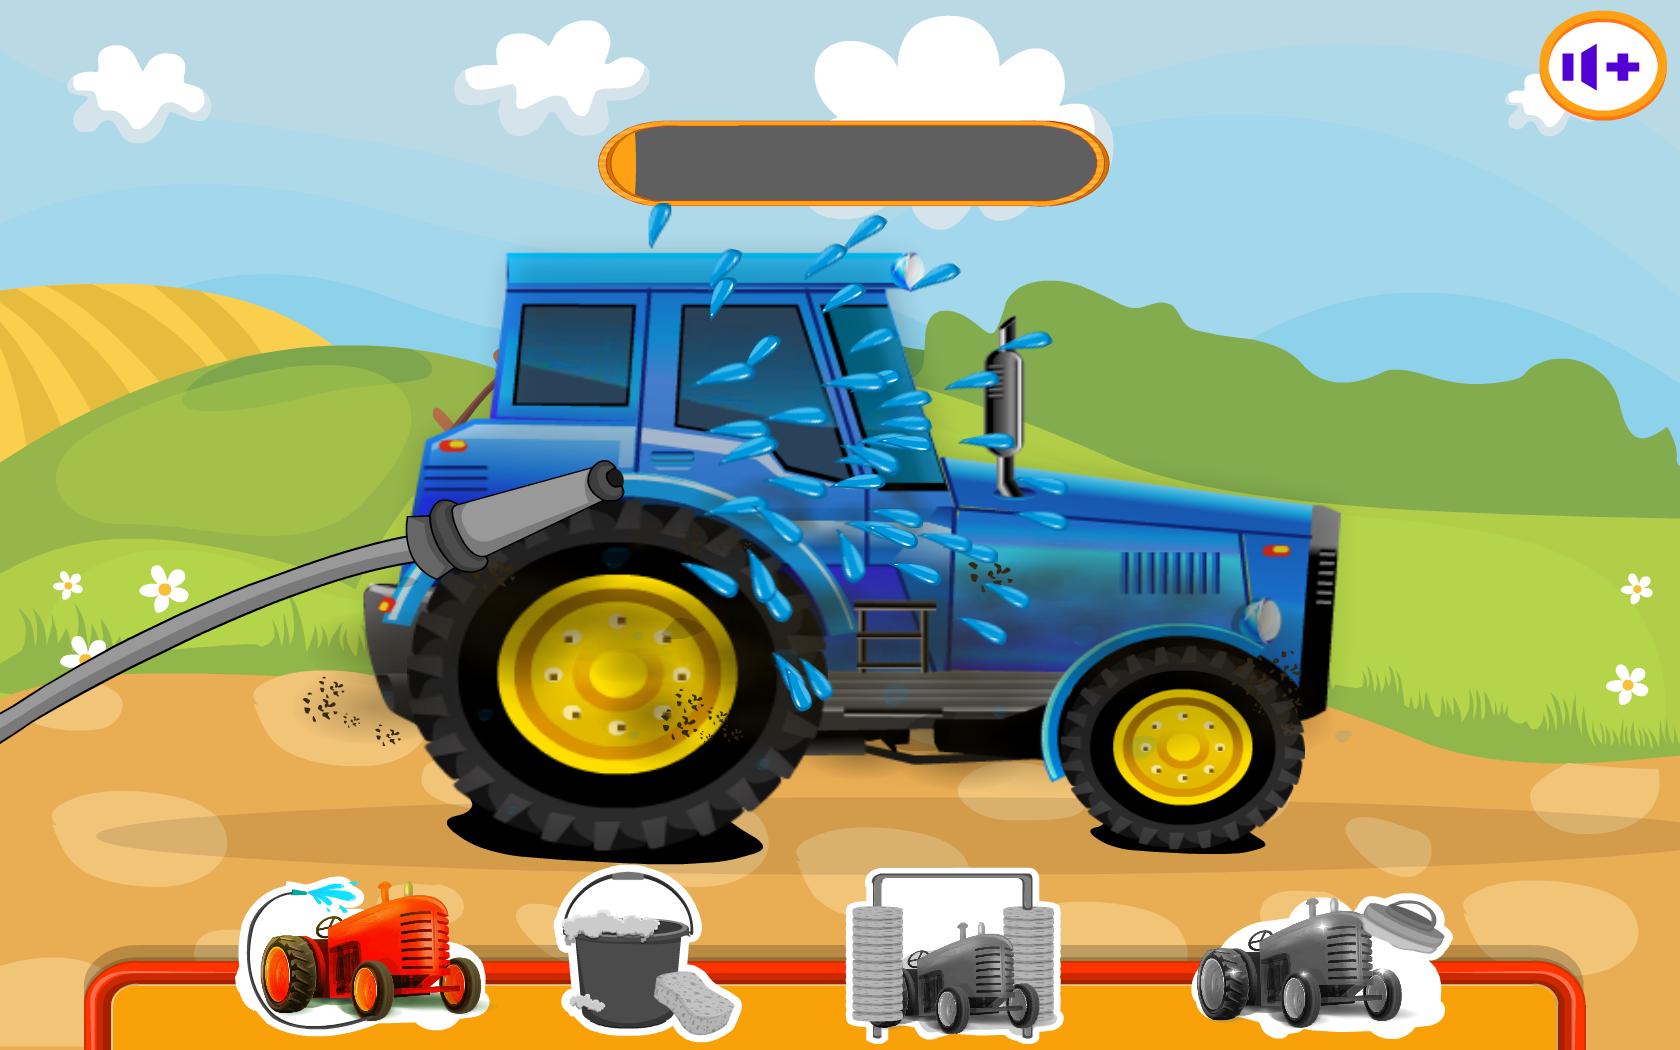 Игра про синий трактор. Трактор Гоша трактор. Синий трактор Гоша трактор Гоша. Трактор Гоша и автомойка.